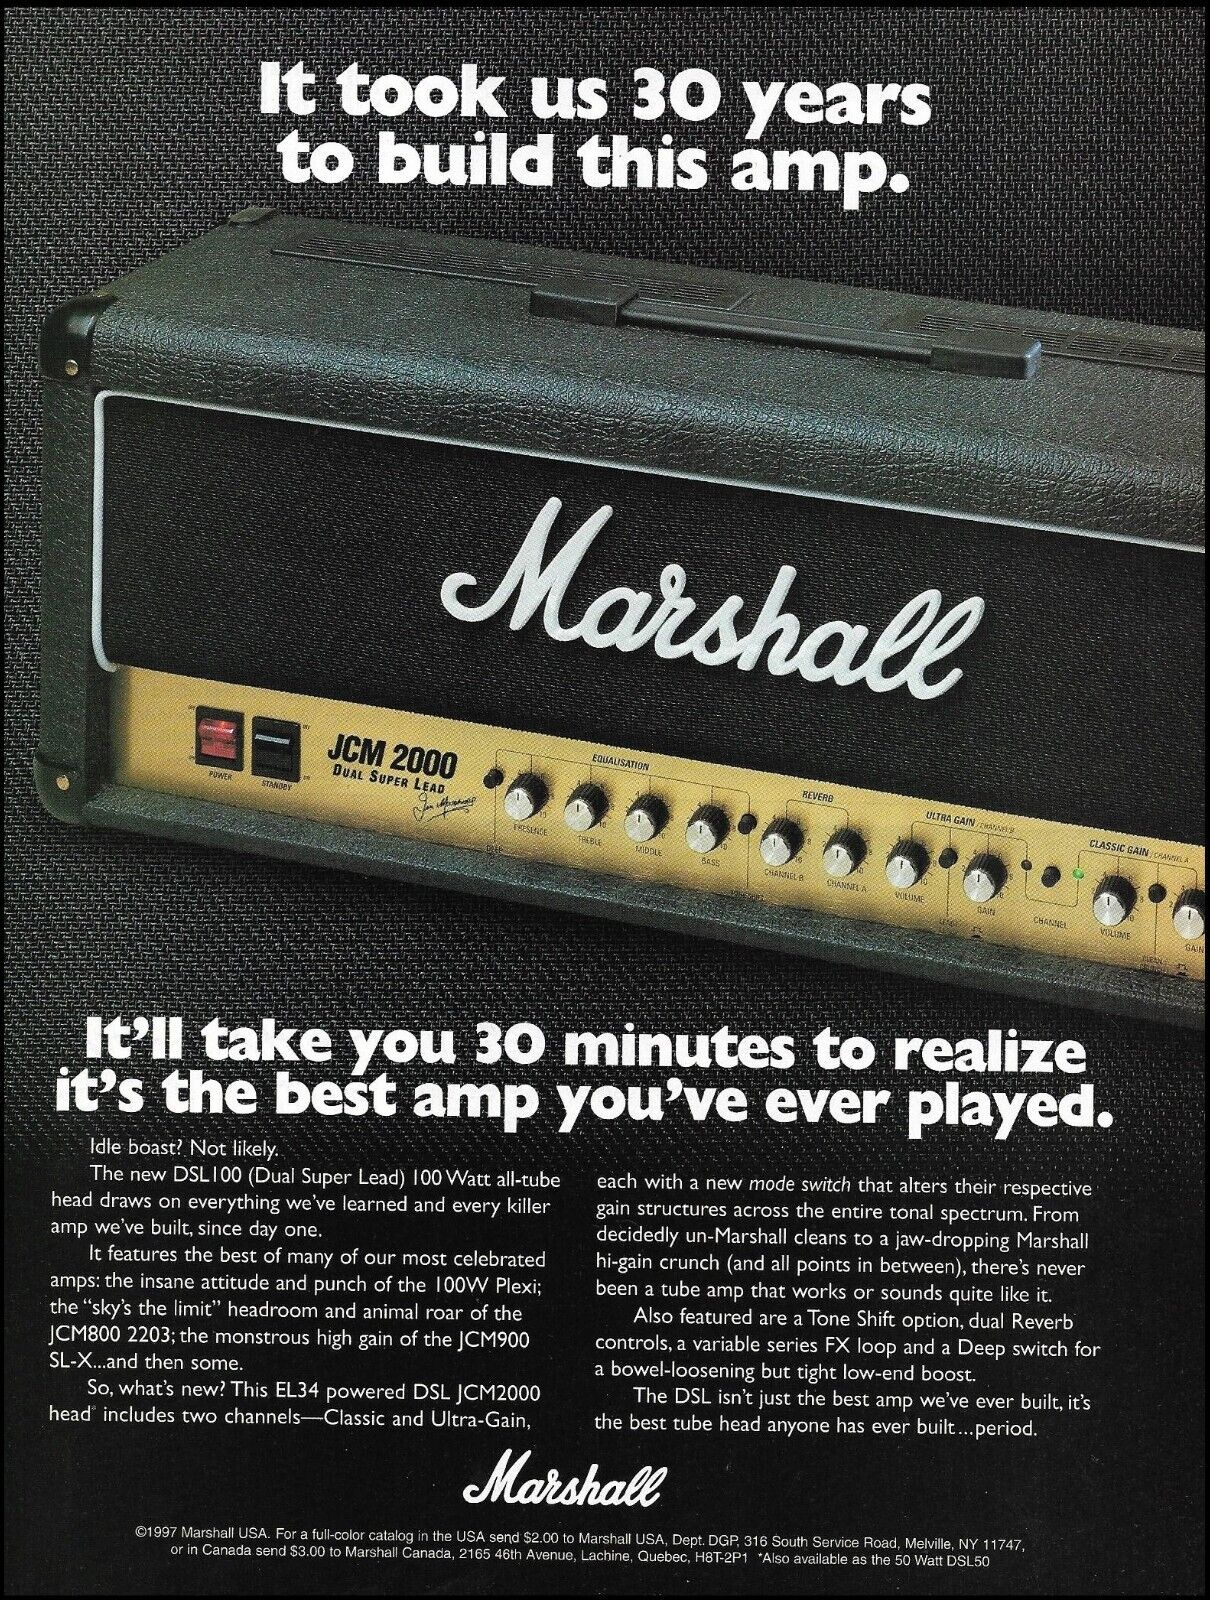 Jim Marshall DSL 100 JCM 2000 guitar amp ad 1997 amplifier advertisement print